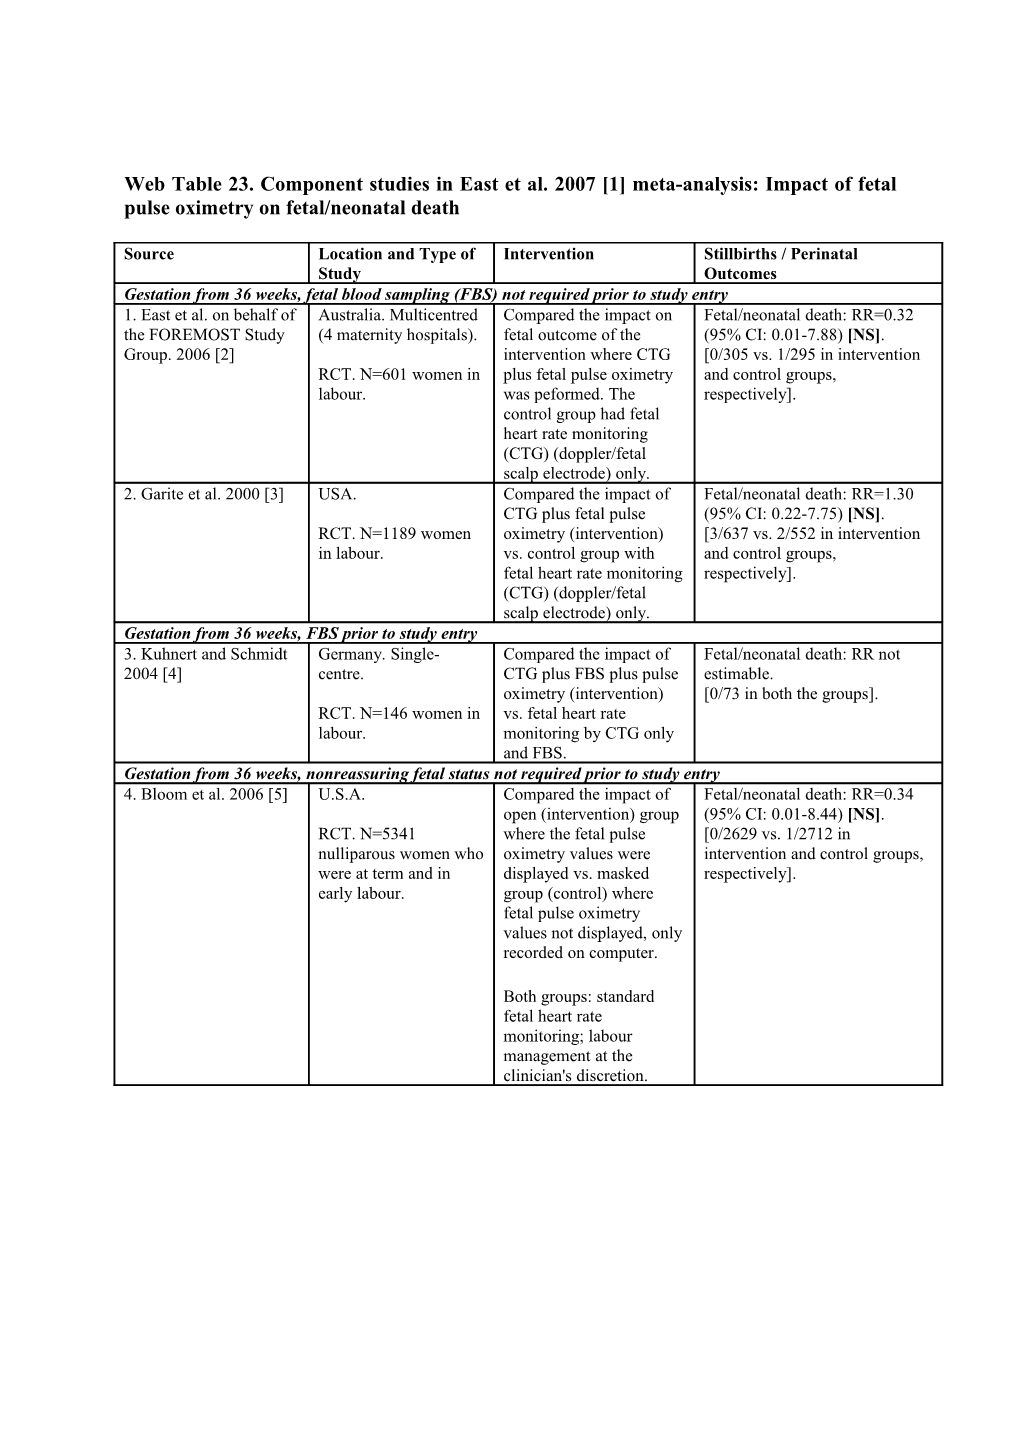 Web Table 23. Component Studies in East Et Al. 2007 1 Meta-Analysis: Impact of Fetal Pulse